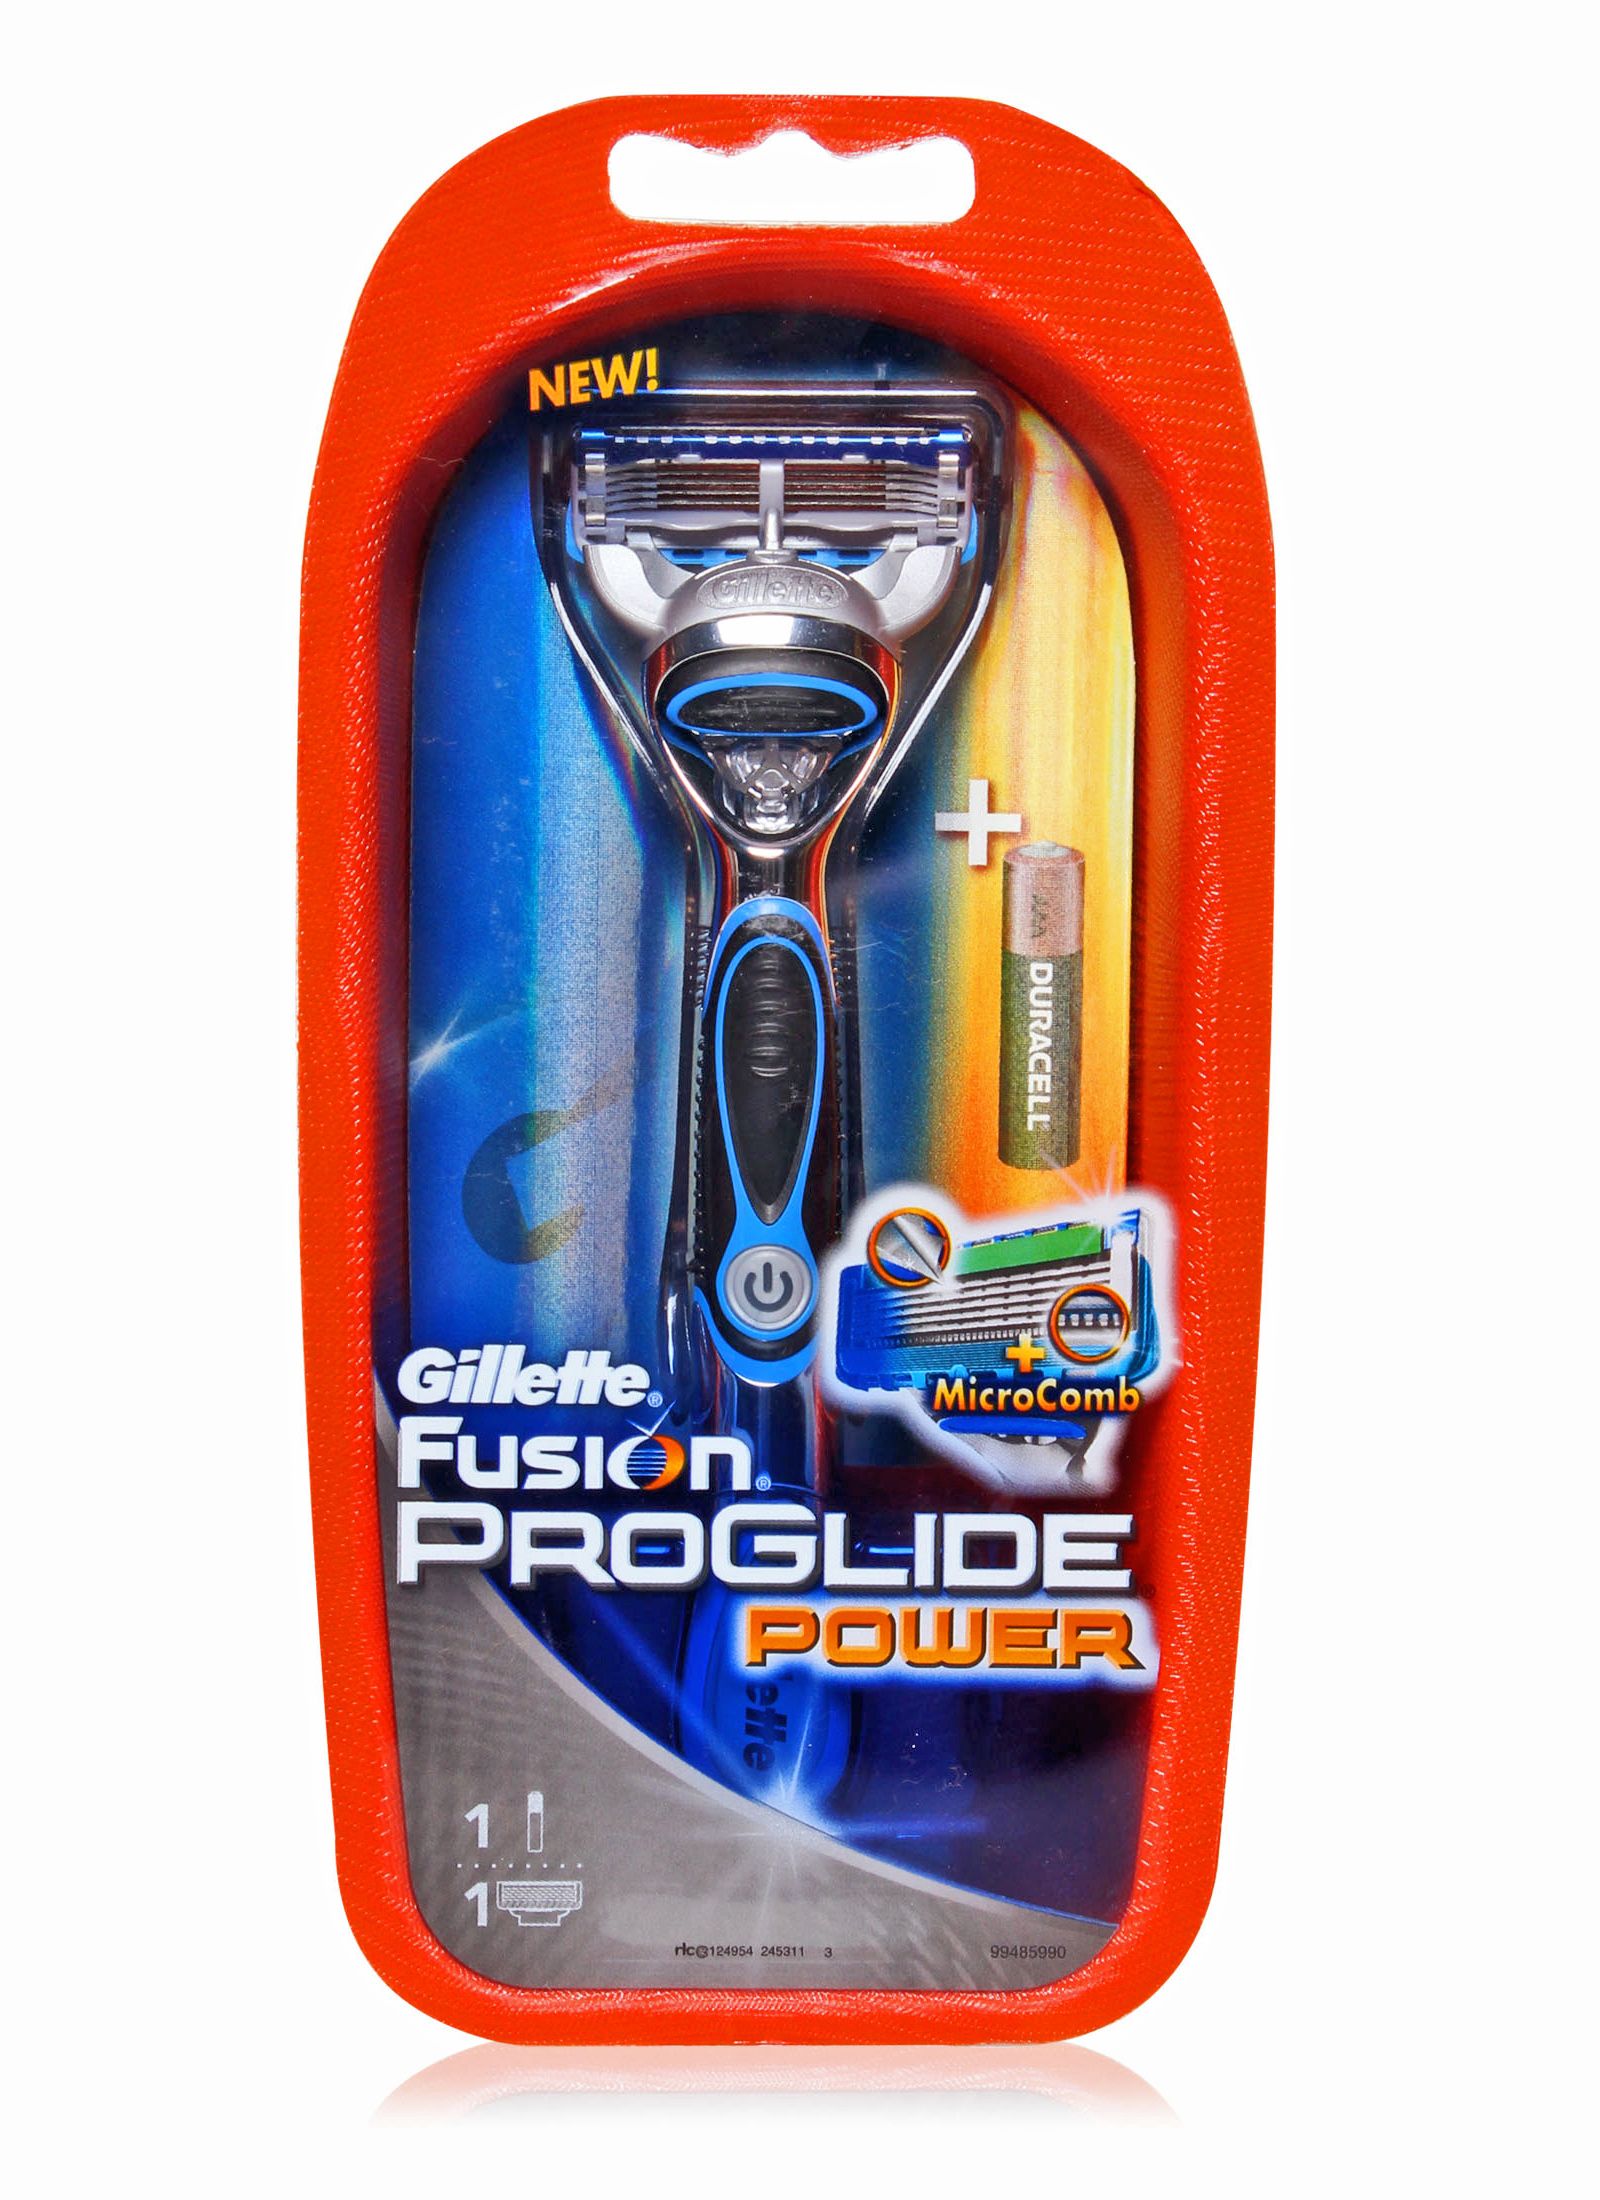 Gillette Fusion Proglide Power Review Shespeaks